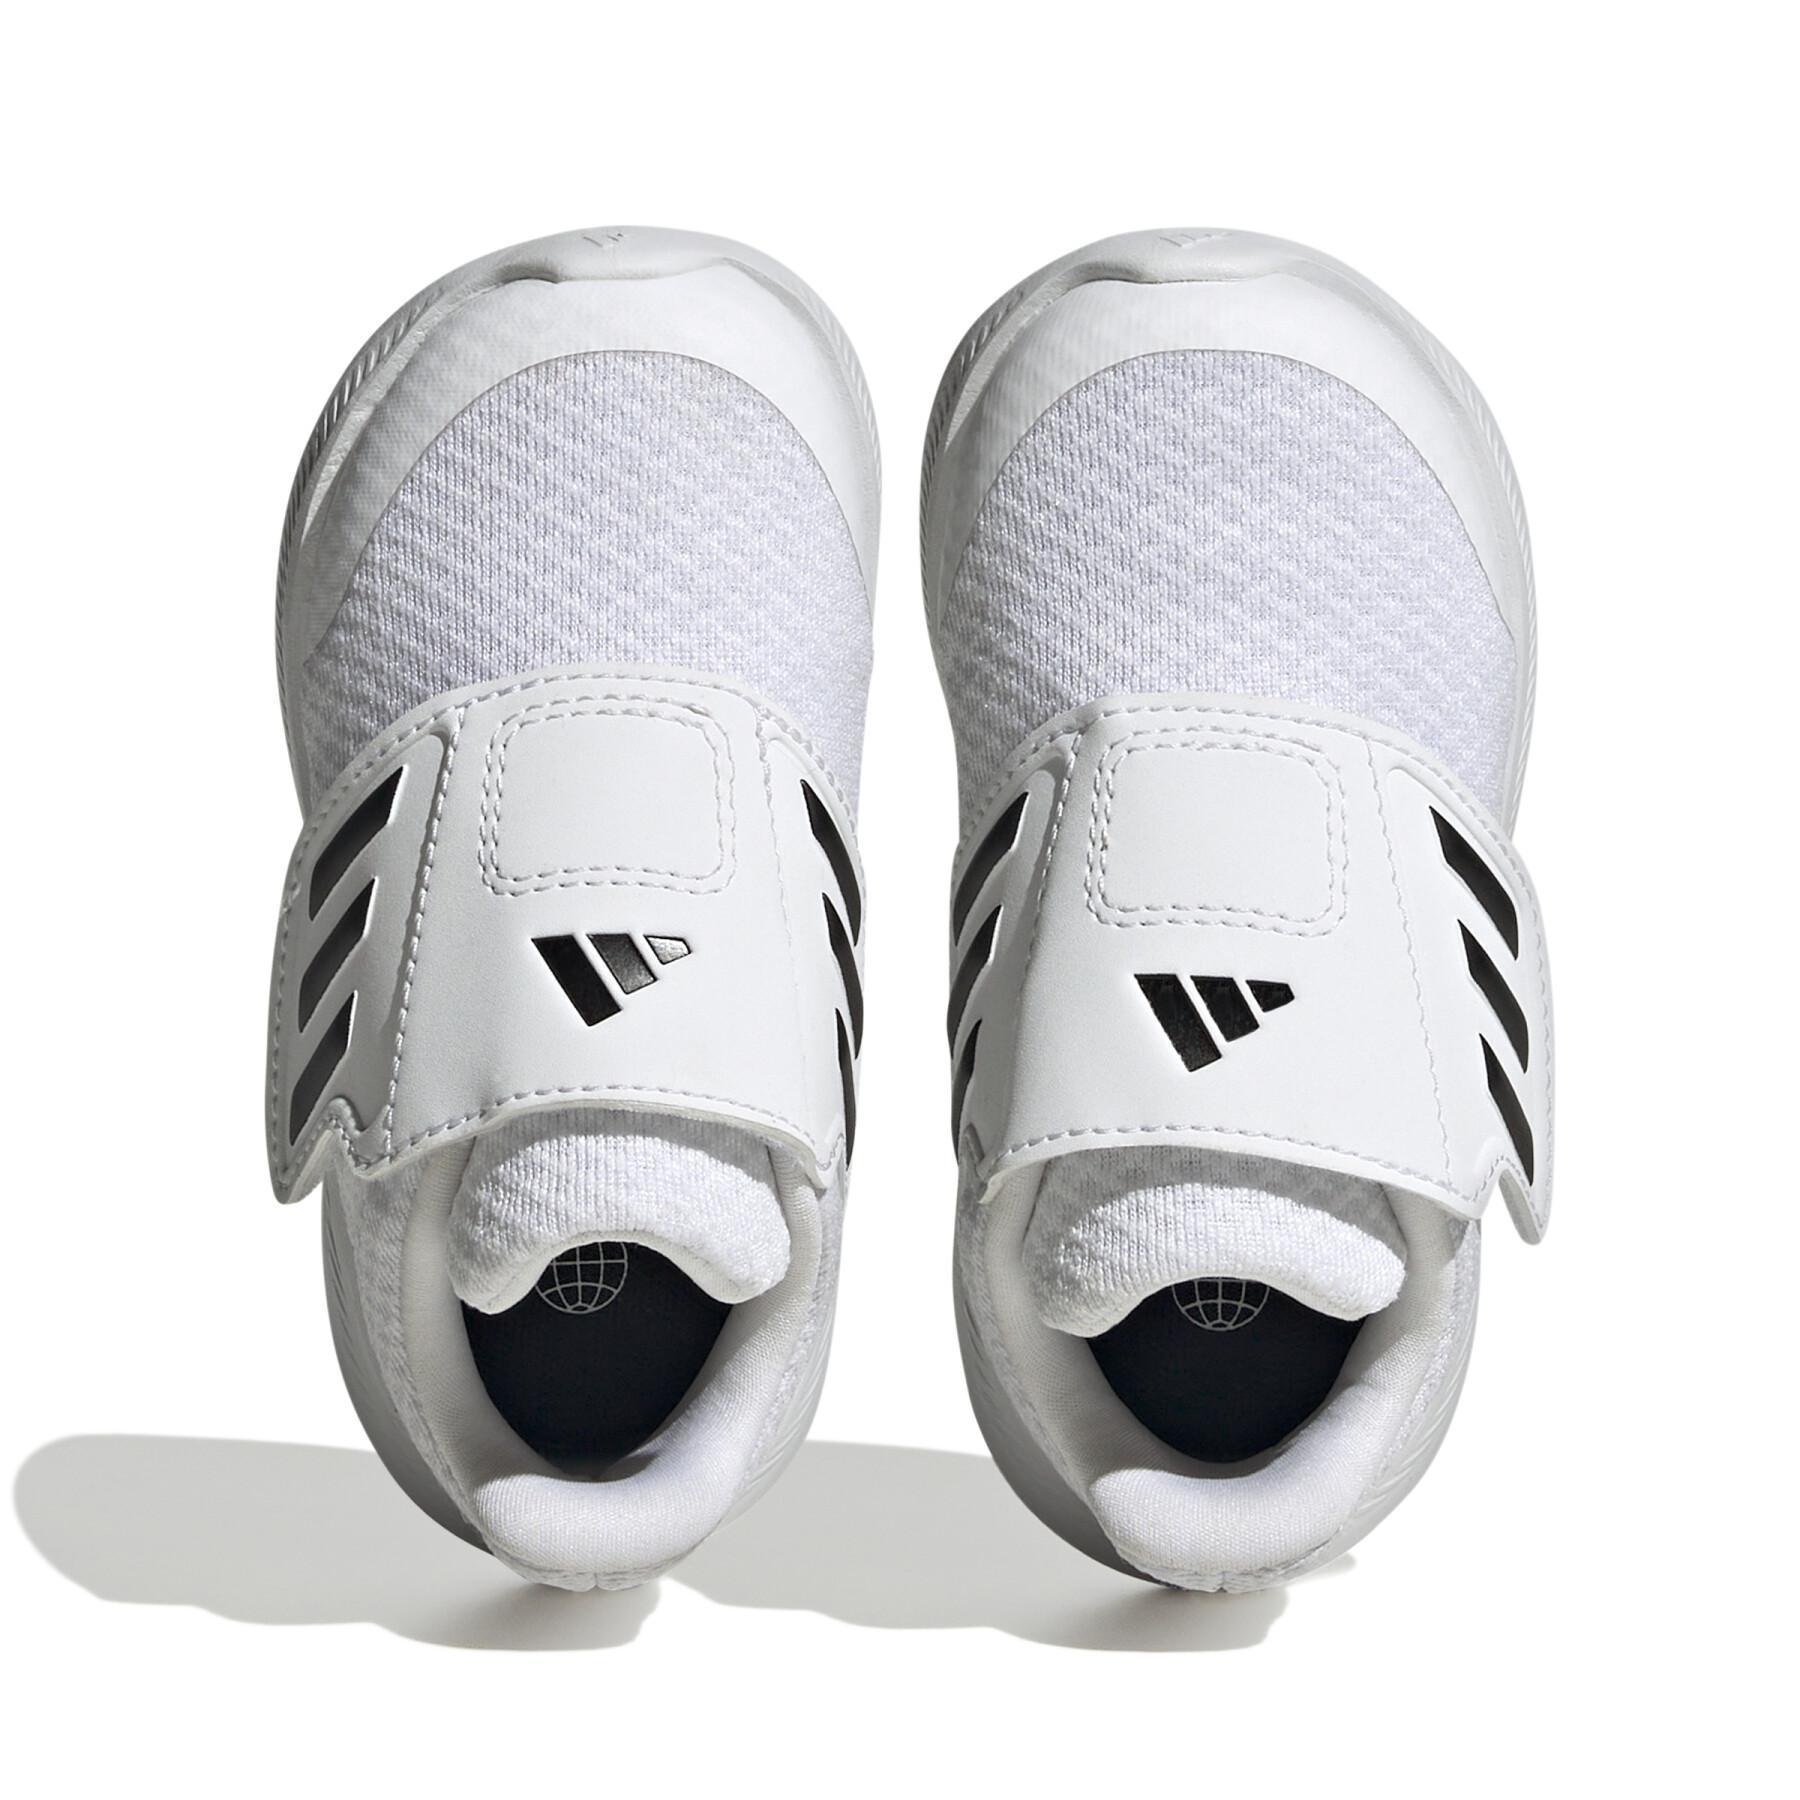  running baby shoes adidas Runfalcon 3.0